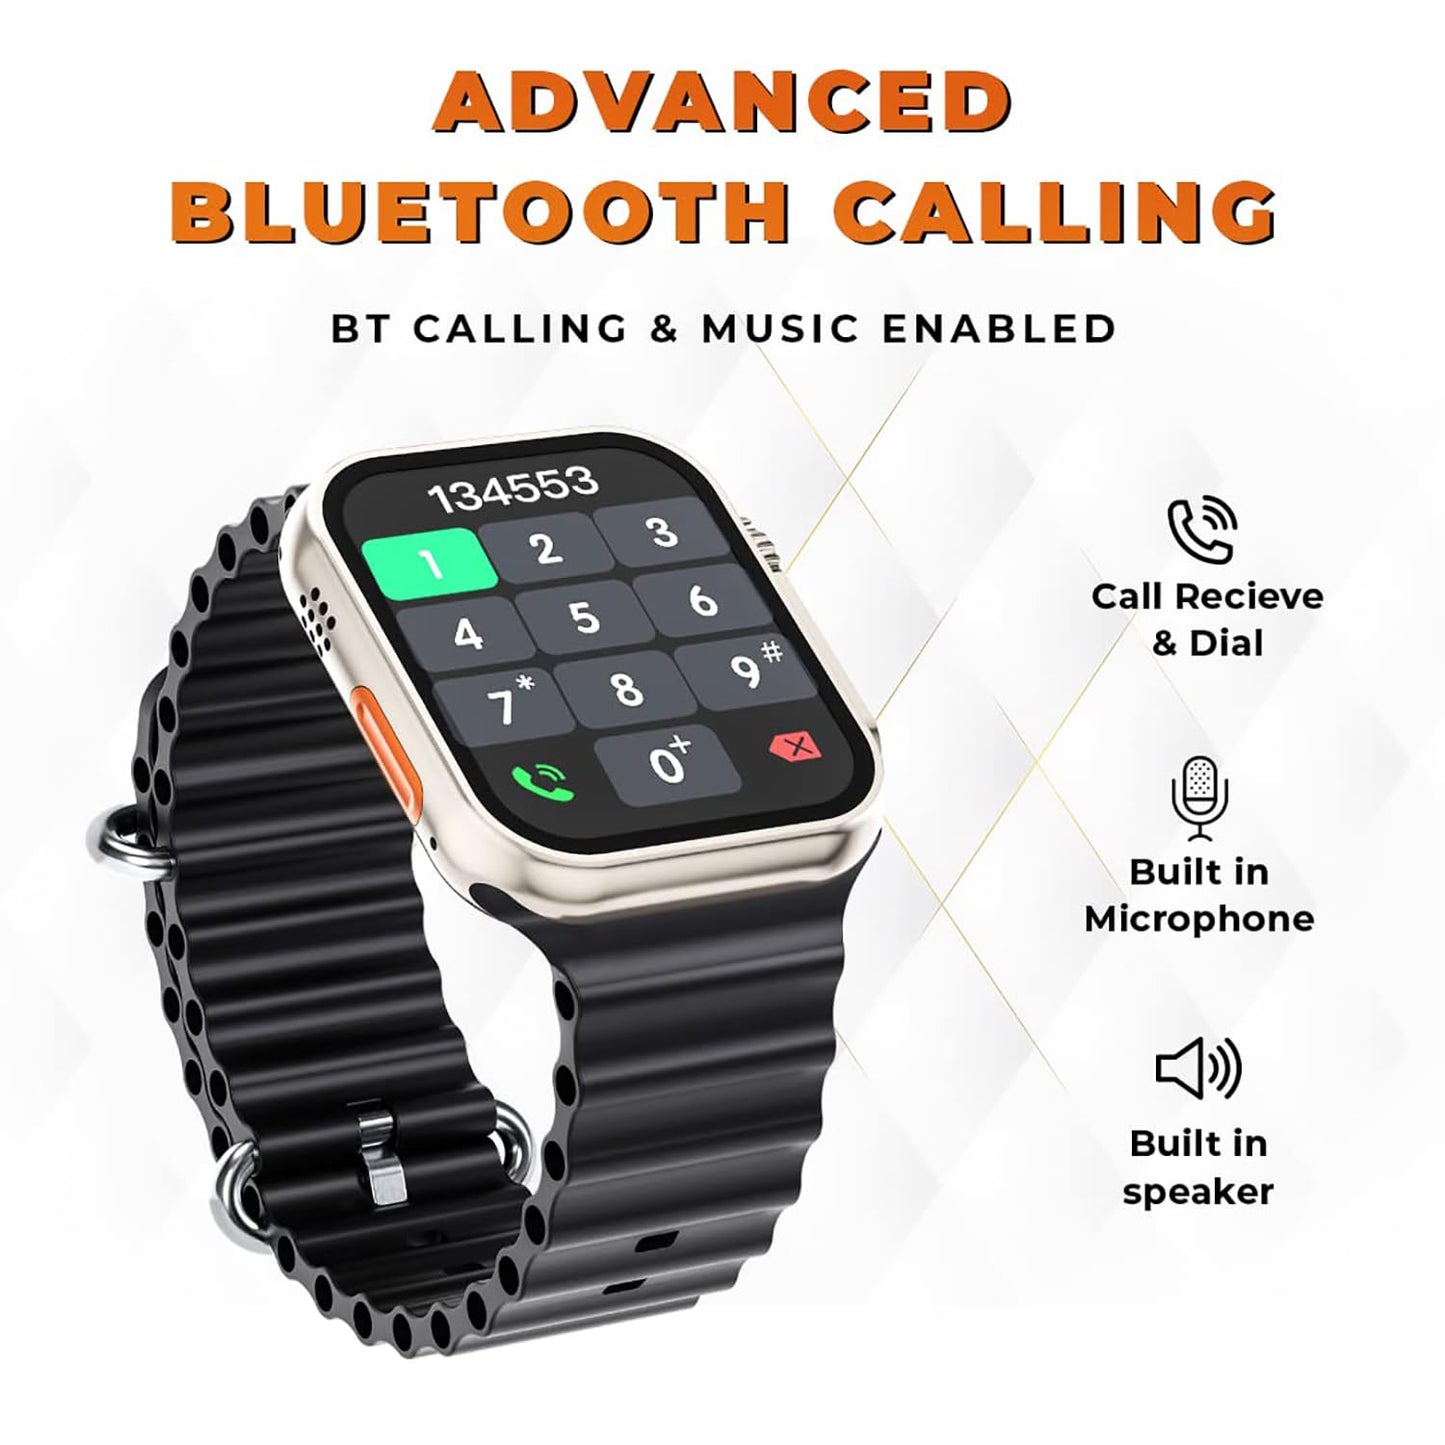 GIZMORE GizFit Vogue Bluetooth Calling Smartwatch | 1.95 Inch HD Display | 600 NITS Smartwatch (Black)